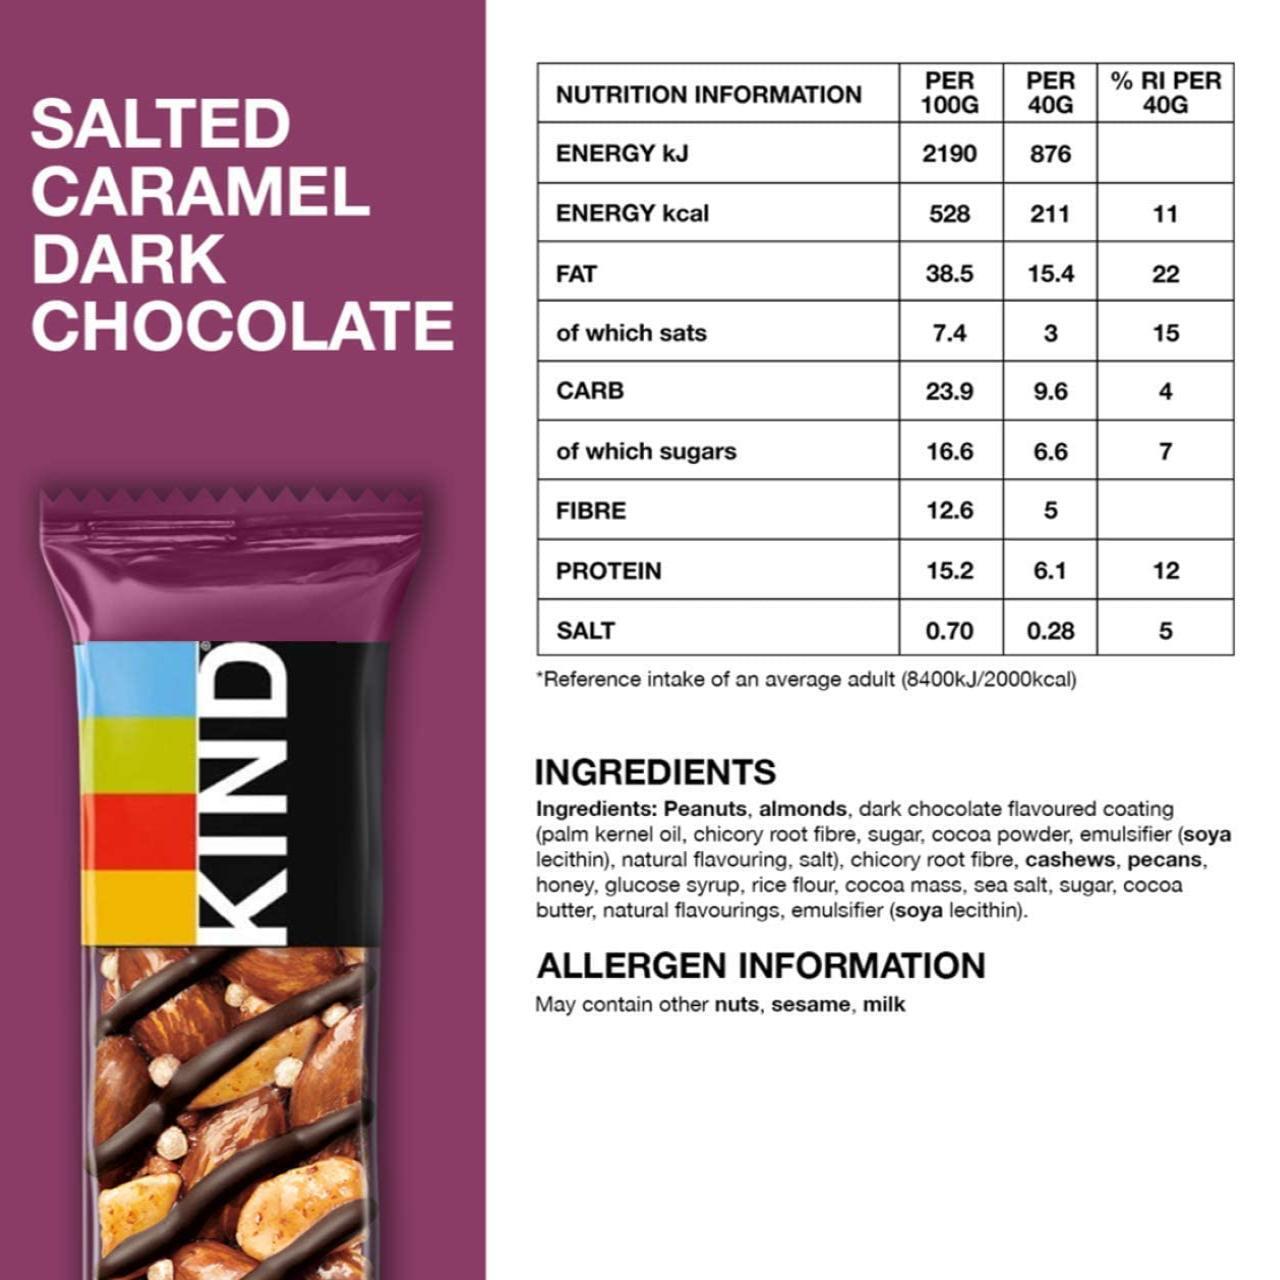 KIND Salted Caramel Dark Chocolate Snack Bar 40g